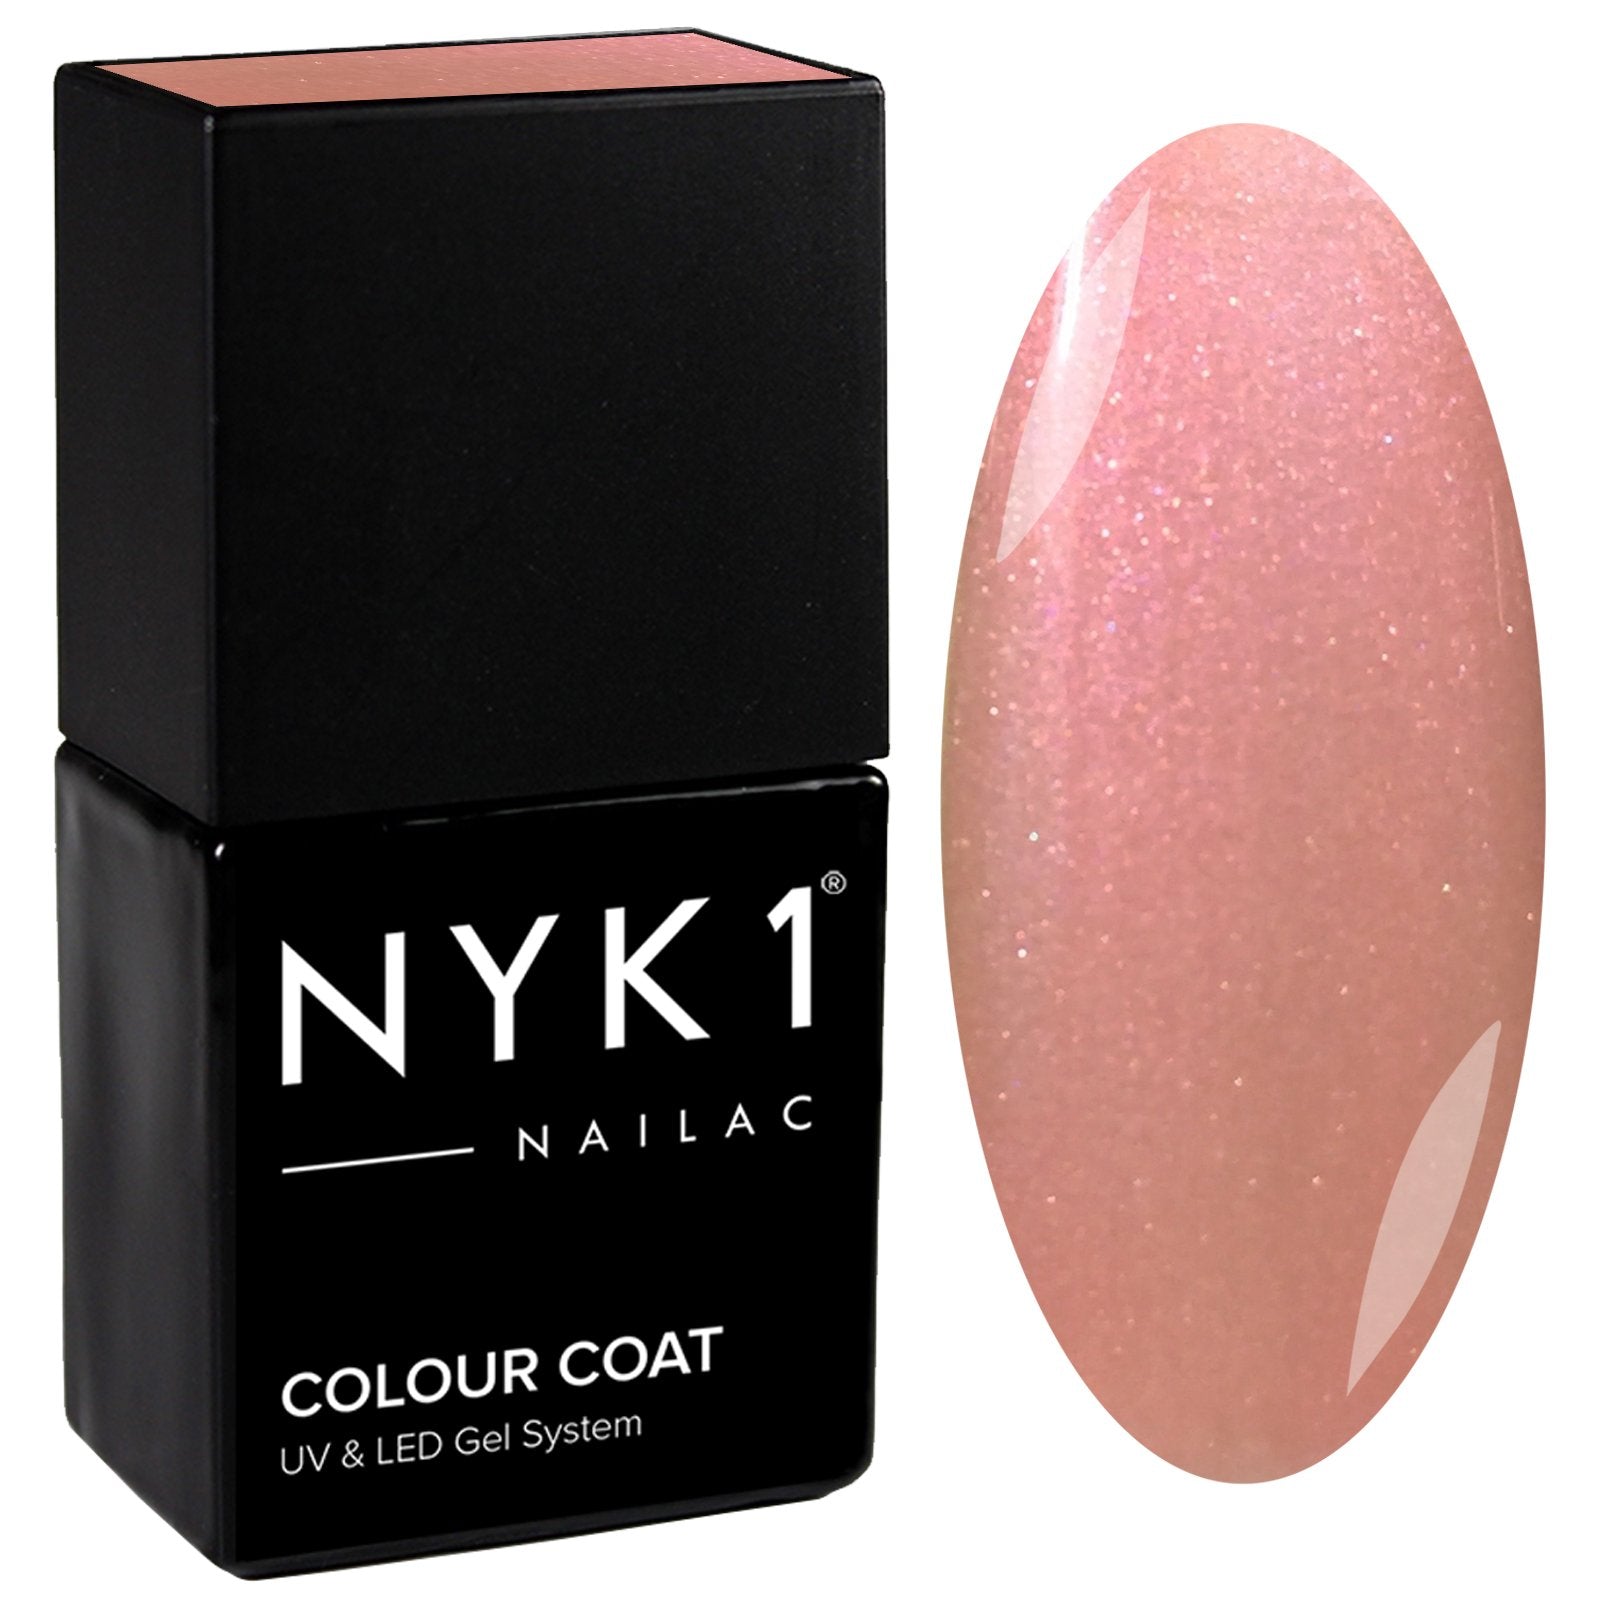 NYK1 Nailac Powder Puff Light Baby Pink Glitter Gel Nail Polish